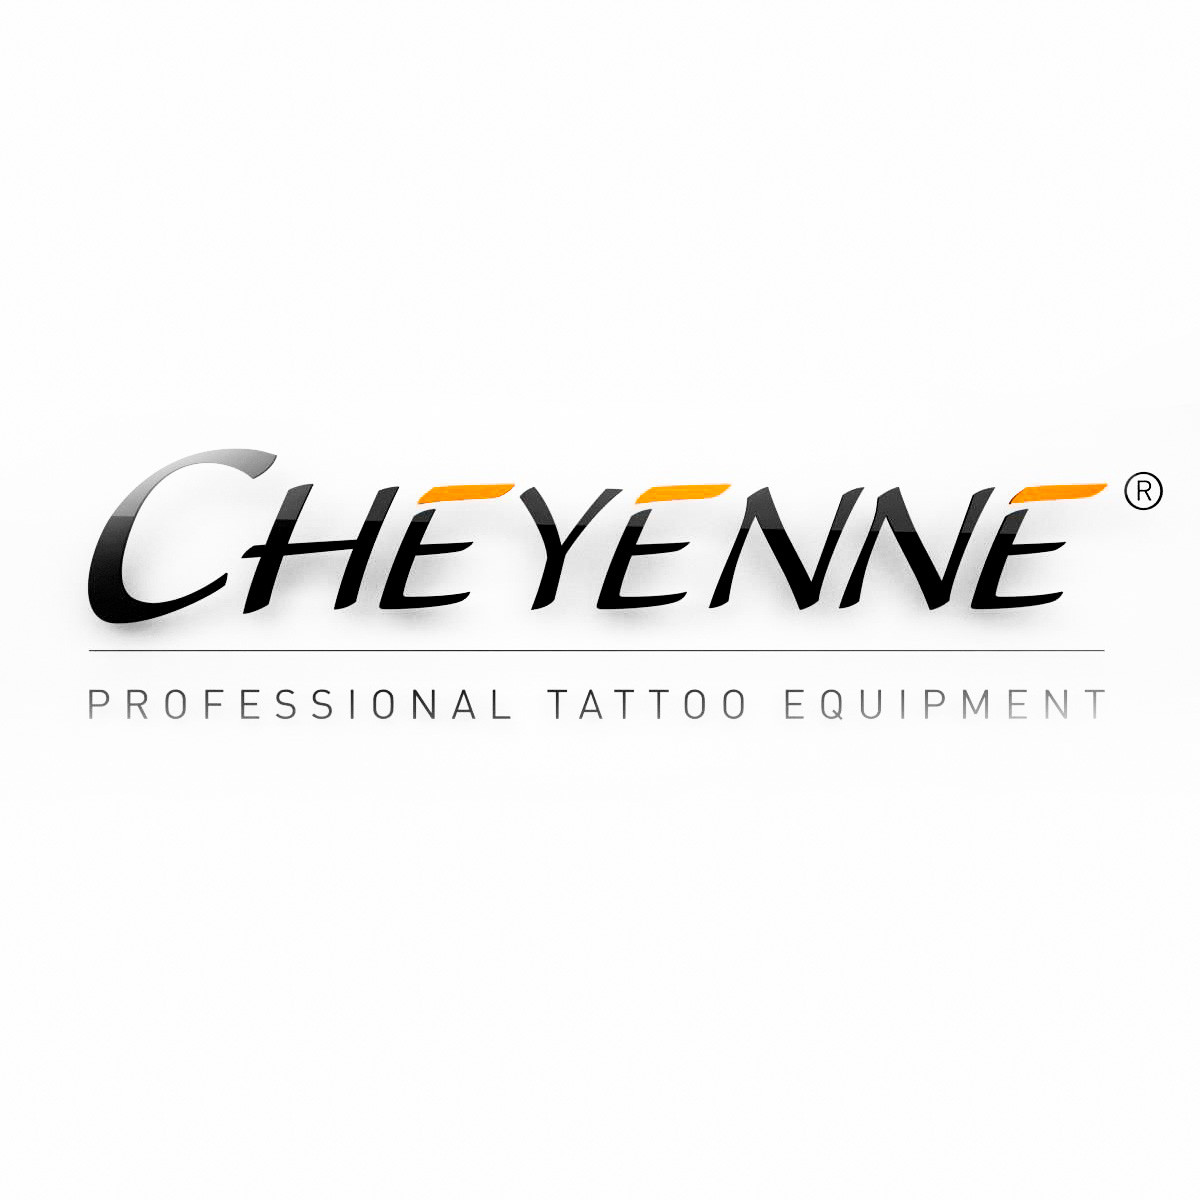 Repair Service Online | Cheyenne Repair Service #08 - YouTube